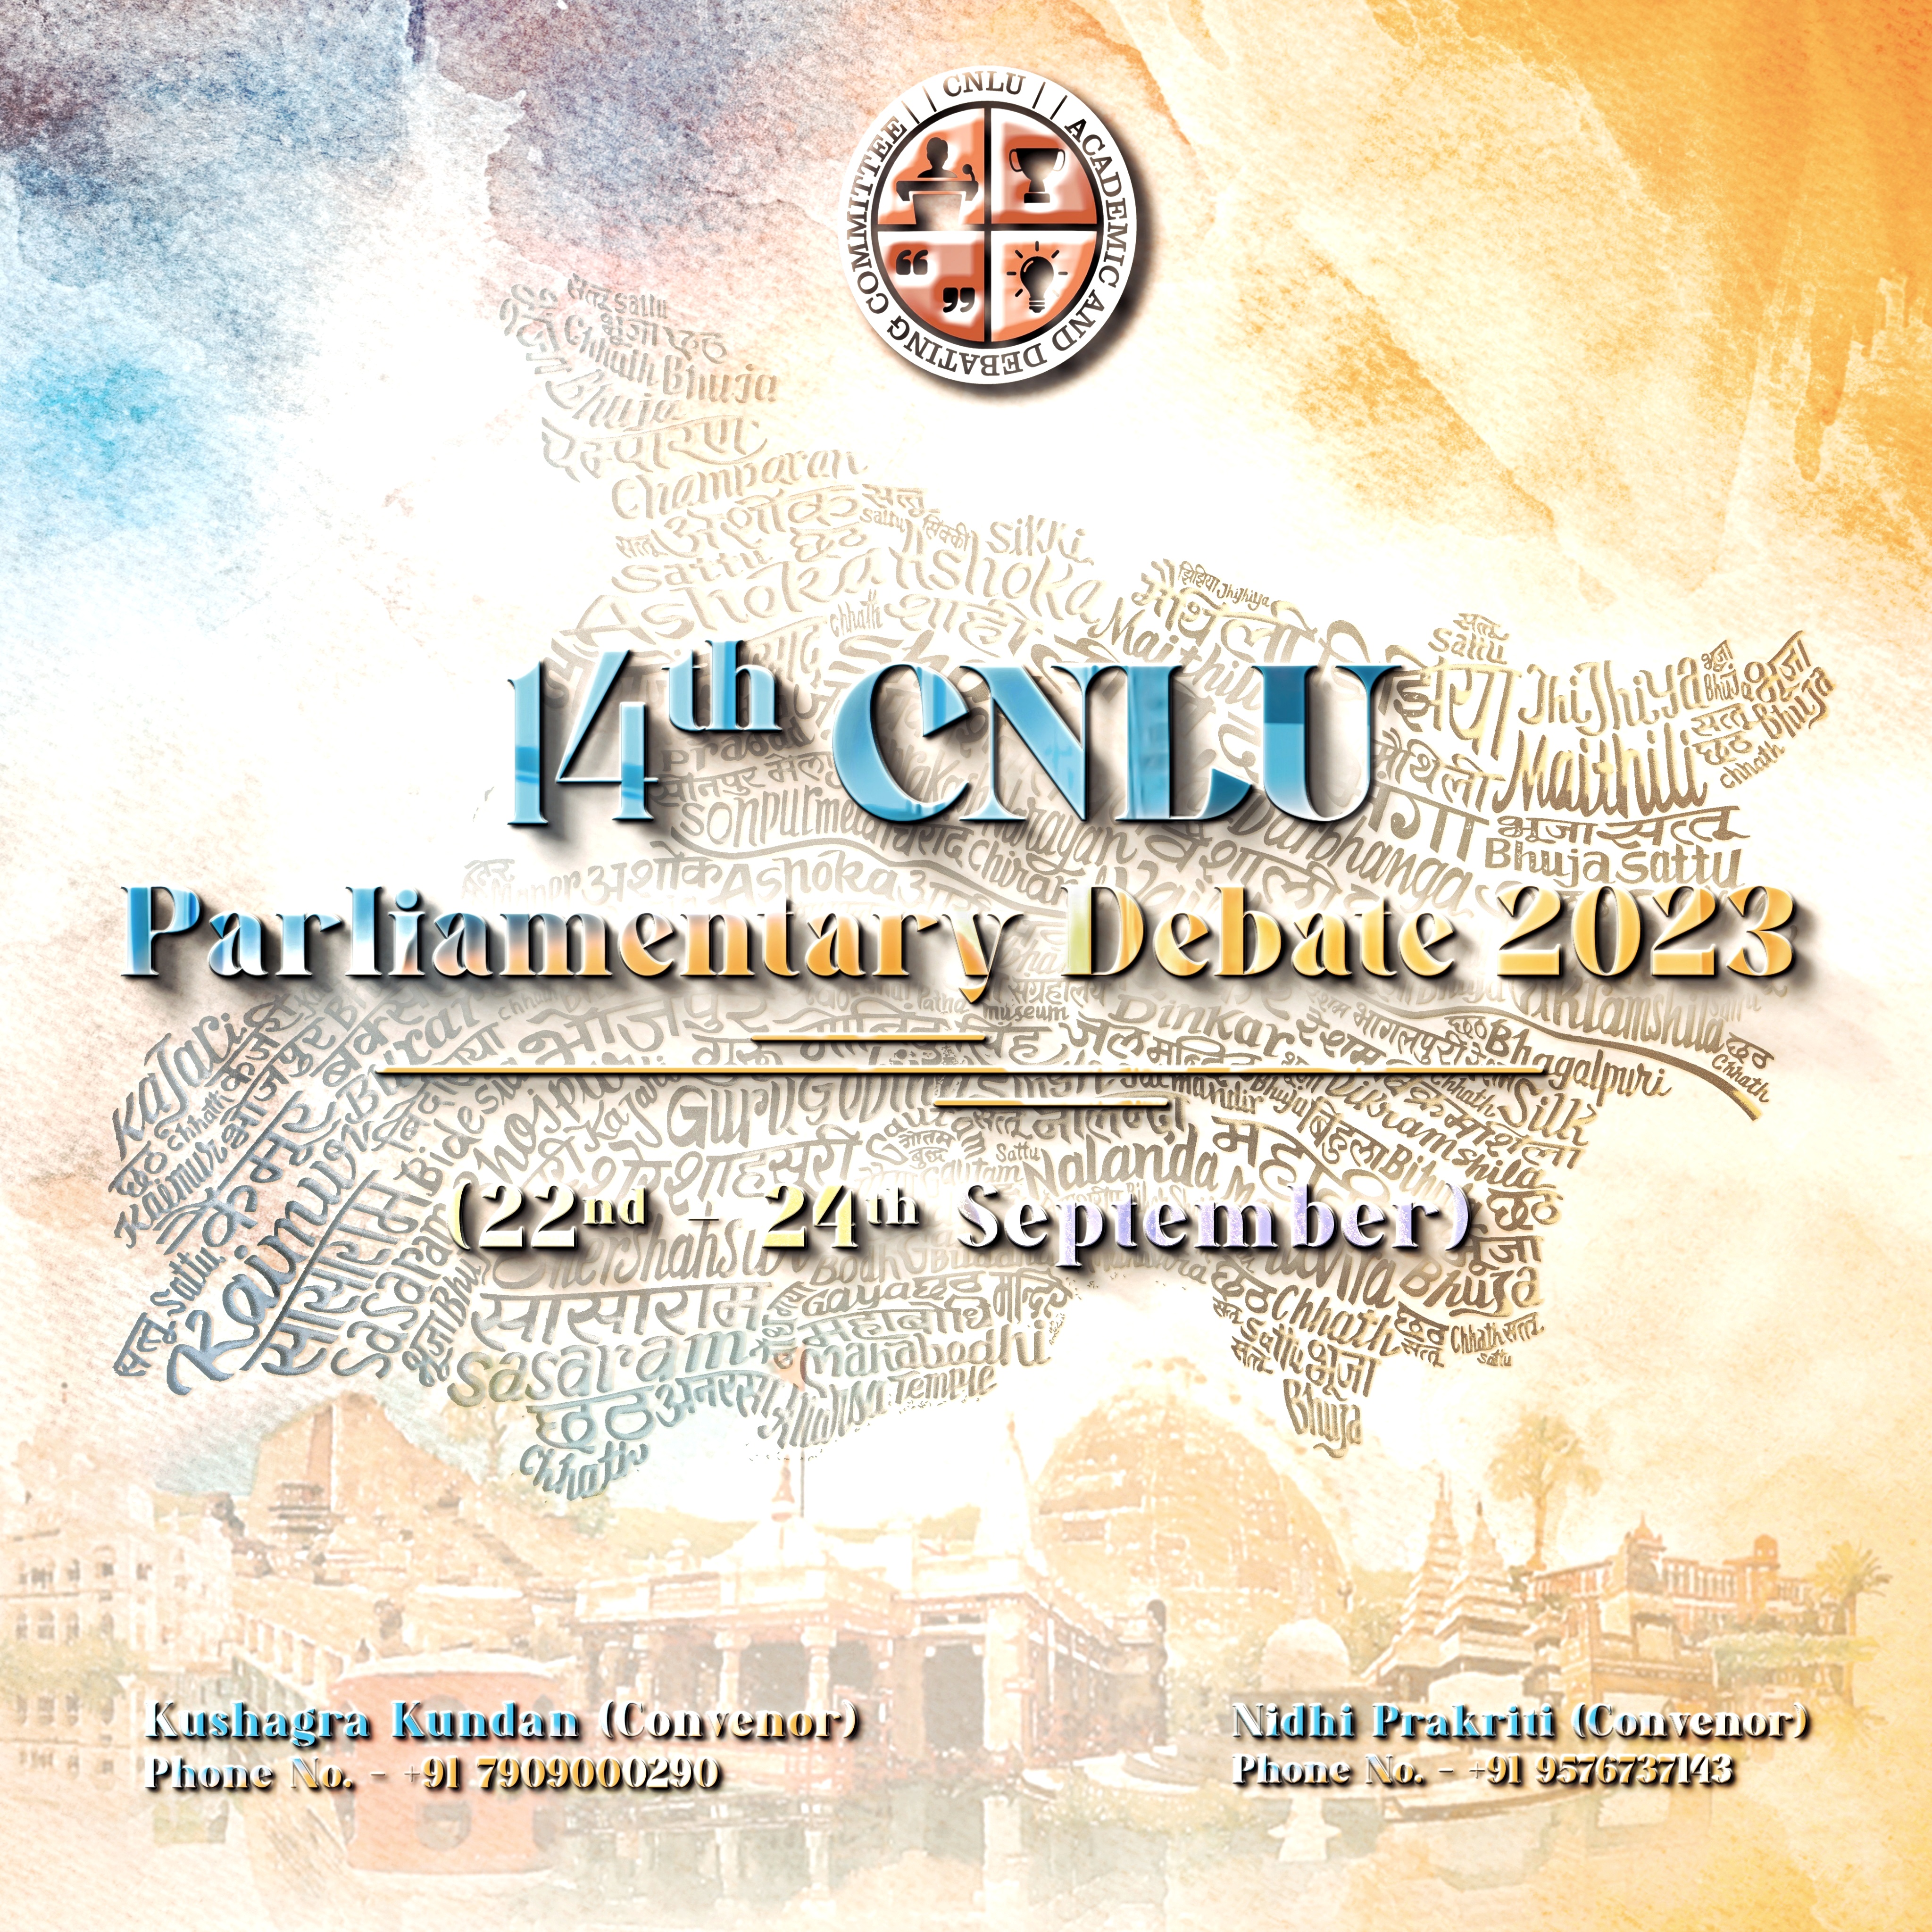 14th CNLU National Parliamentary Debate